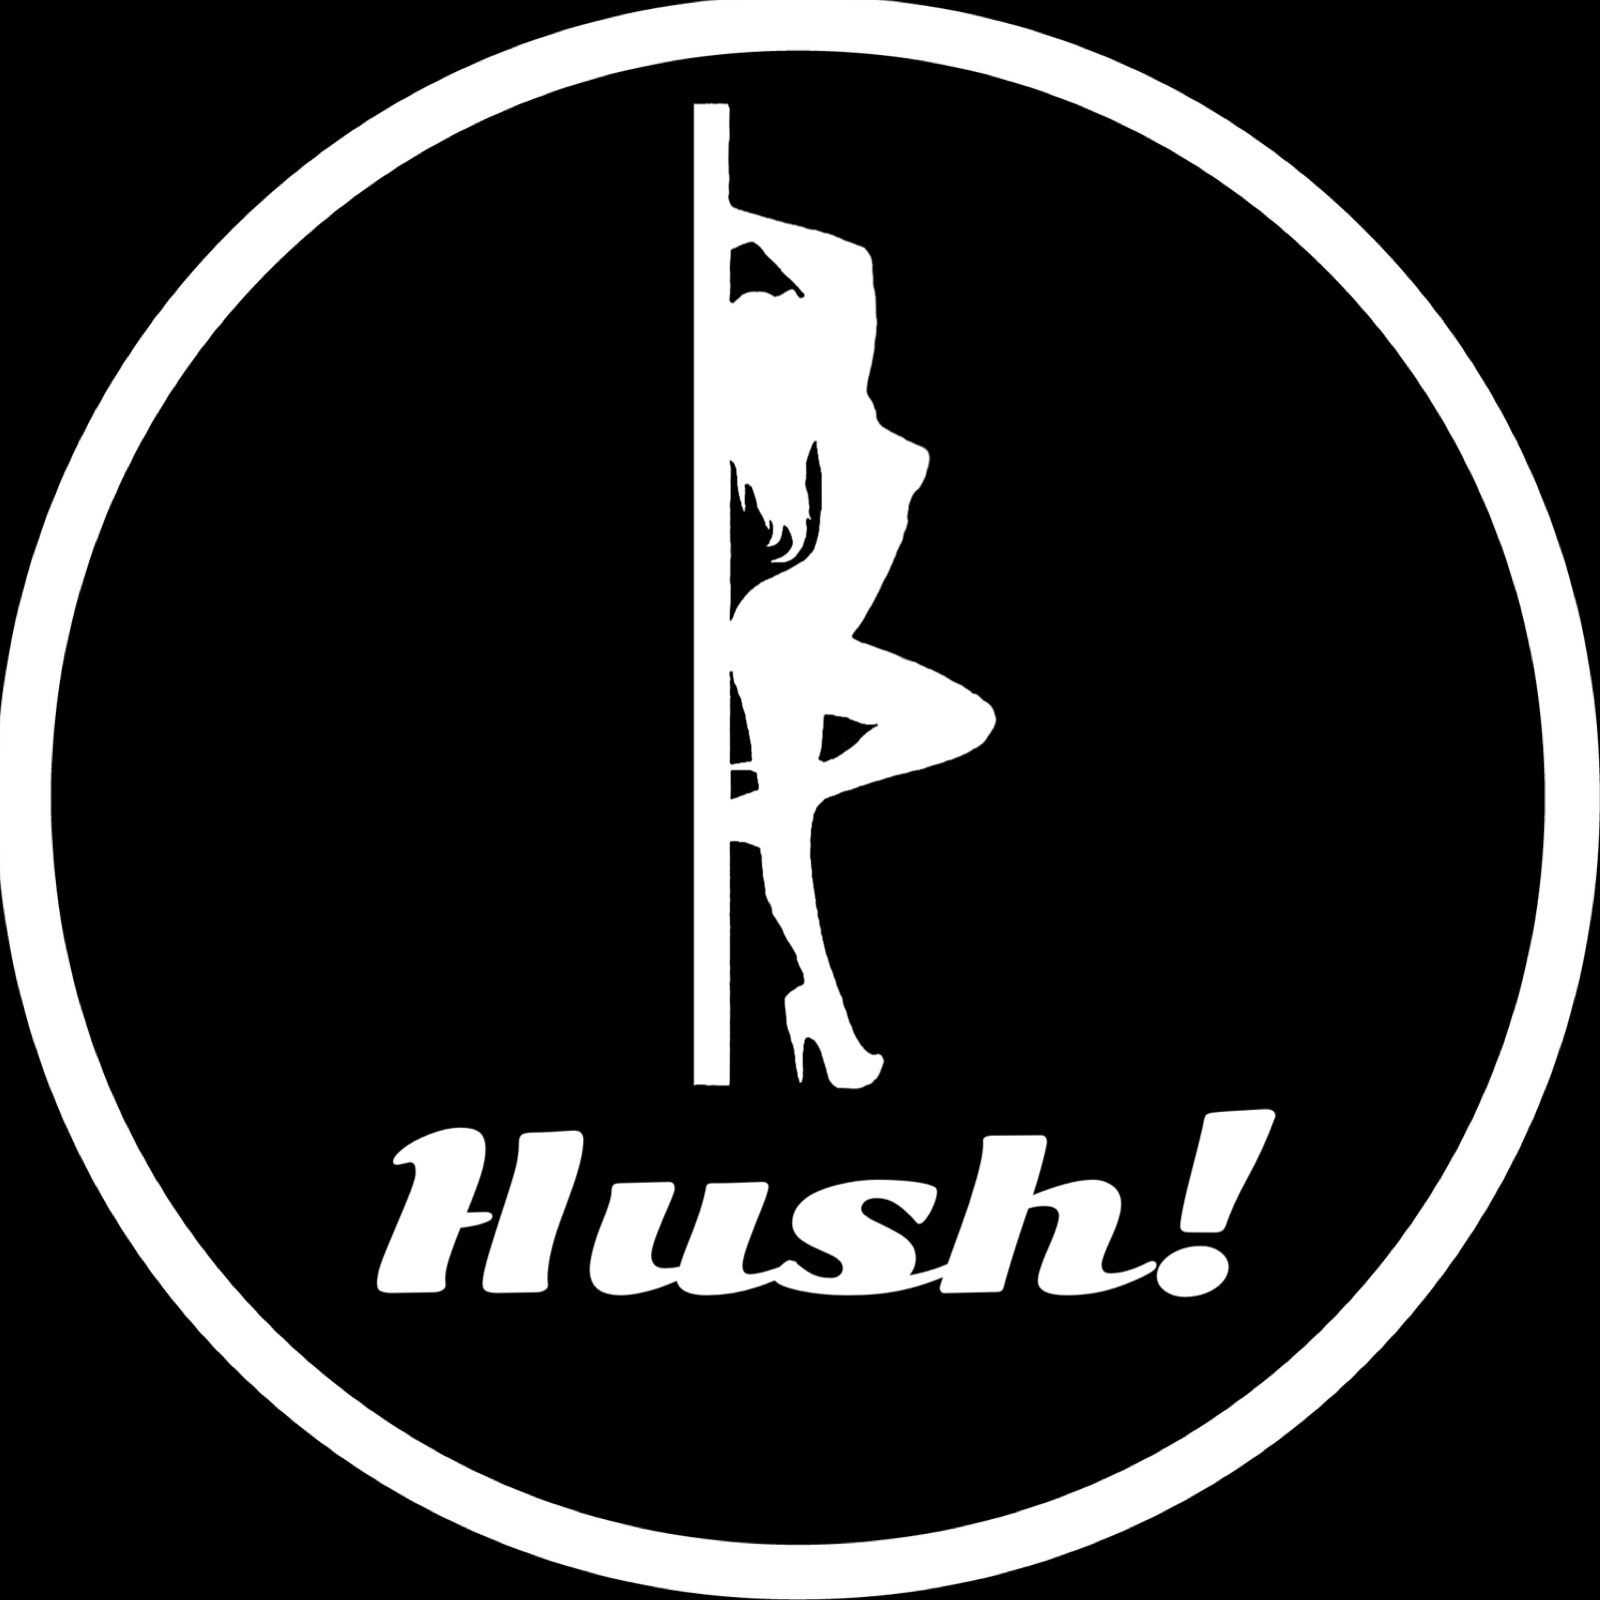 Hush! - Hush! Vol 66- #open: dating, community, inclusiveness